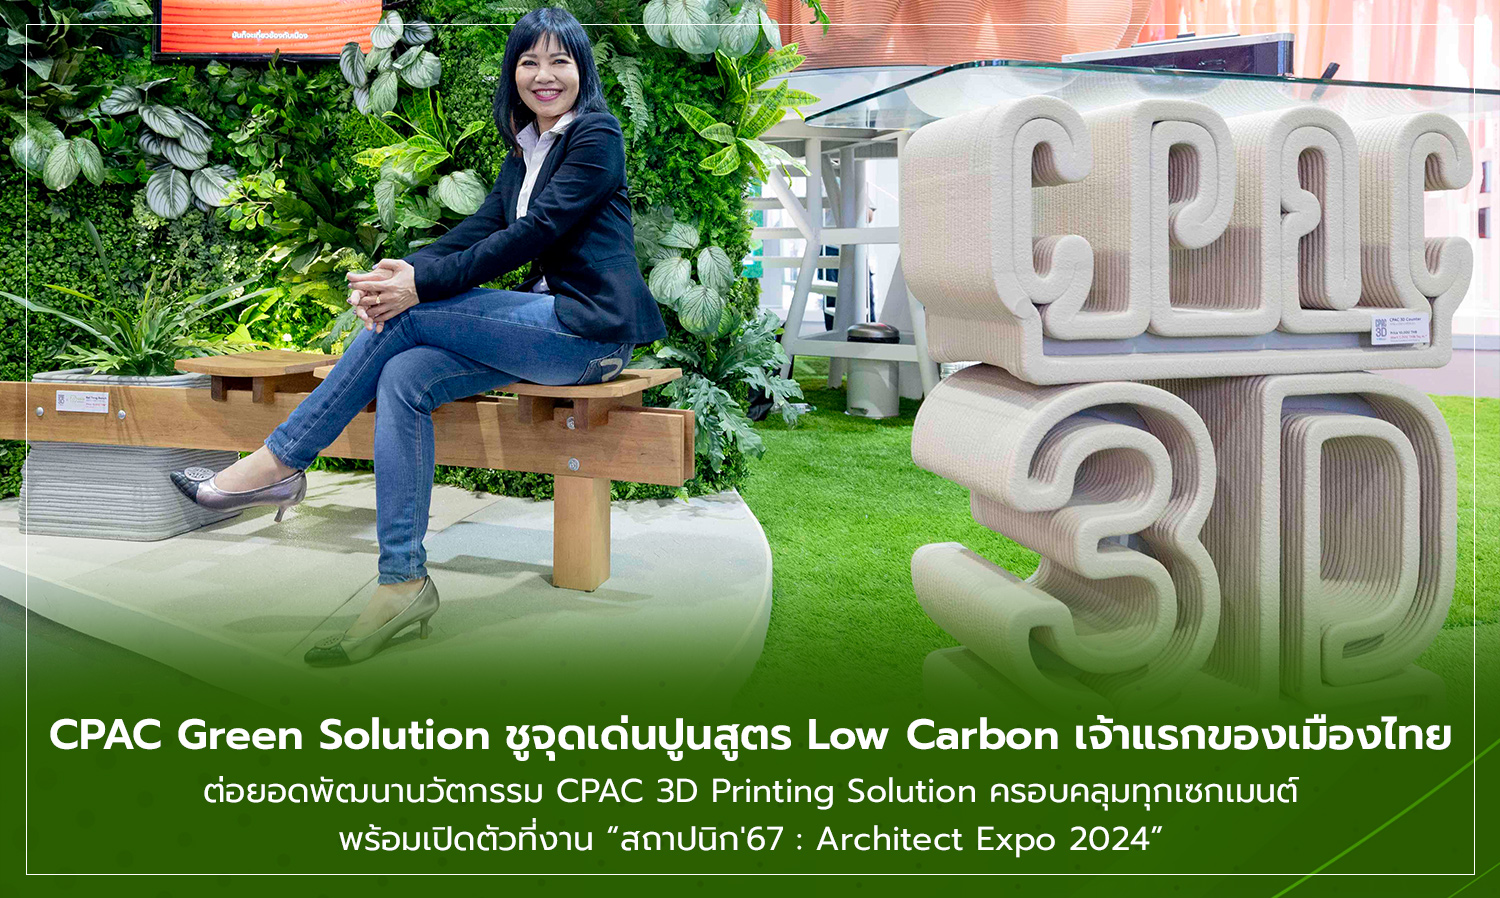 CPAC Green Solution ชูจุดเด่นปูนสูตร Low Carbon เจ้าแรกของเมืองไทย ต่อยอดพัฒนานวัตกรรม CPAC 3D Printing Solution ครอบคลุมทุกเซกเมนต์ พร้อมเปิดตัวที่งาน สถาปนิก67 Architect Expo 2024